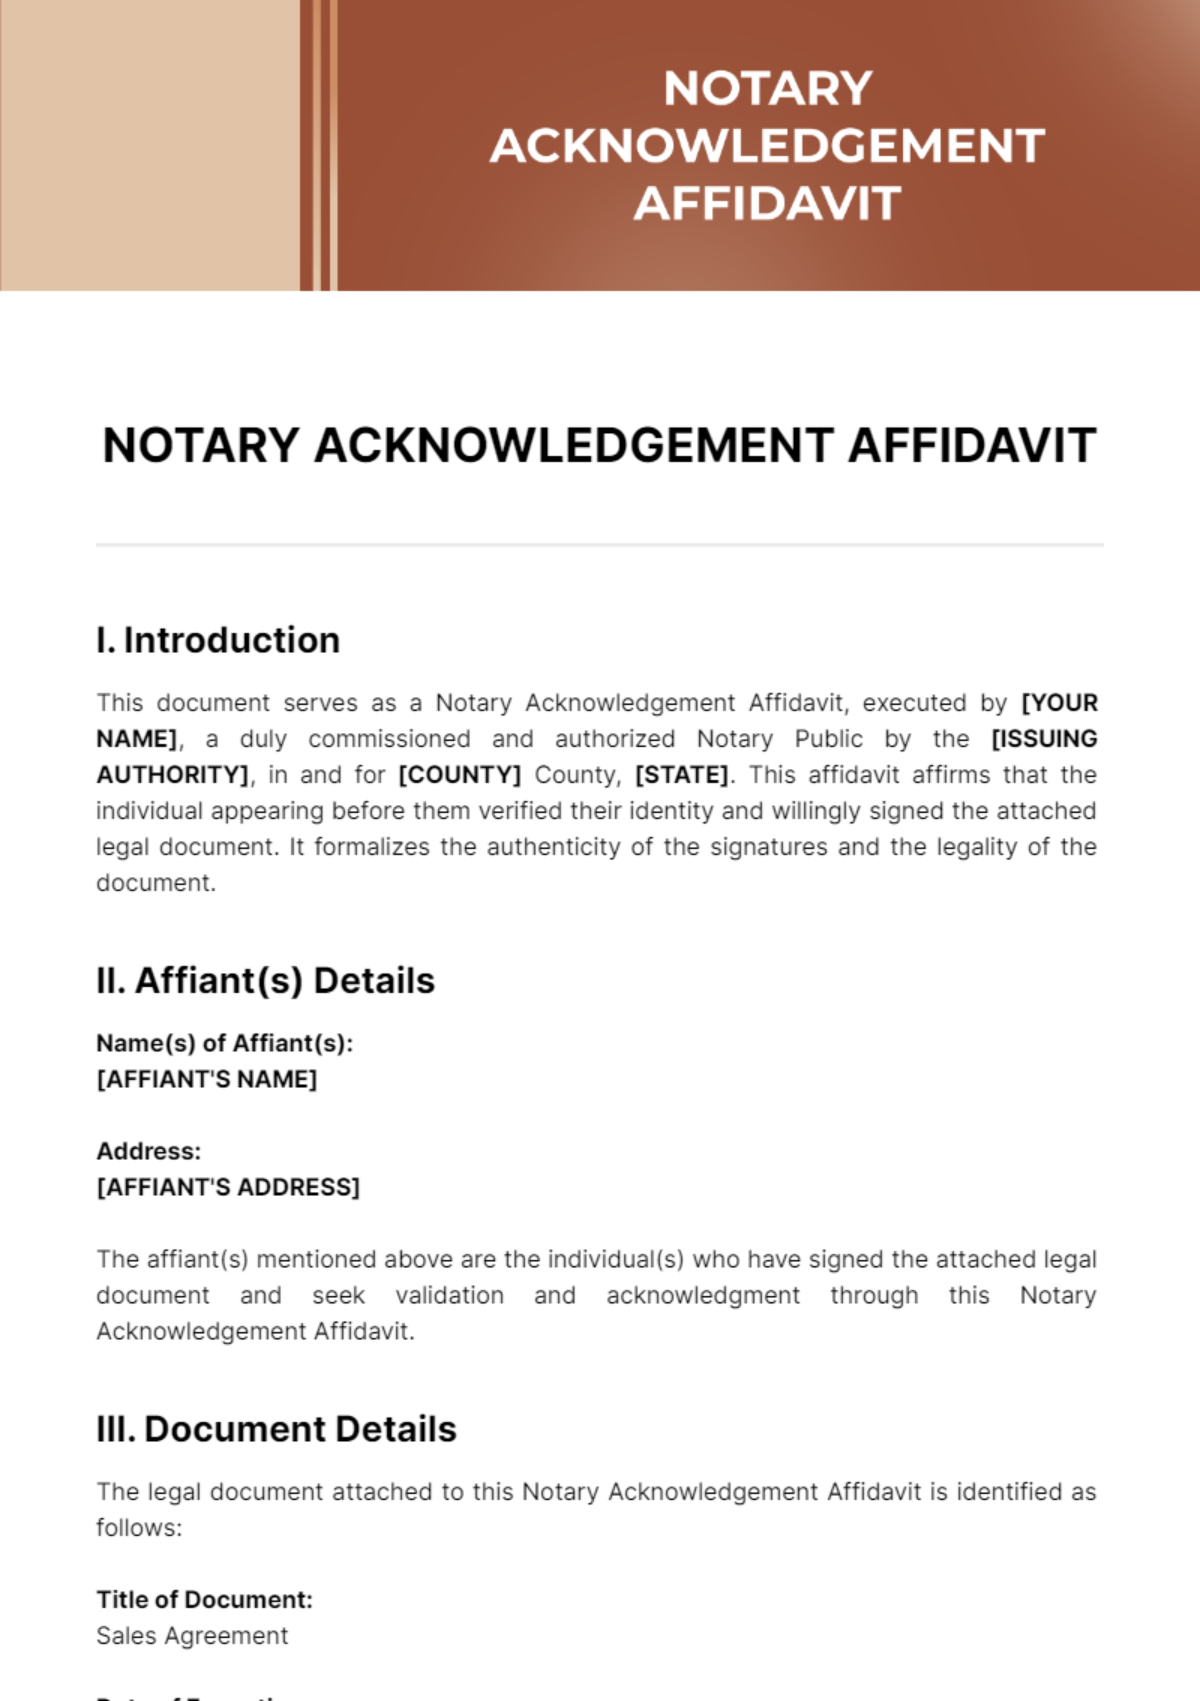 Free Notary Acknowledgement Affidavit Template